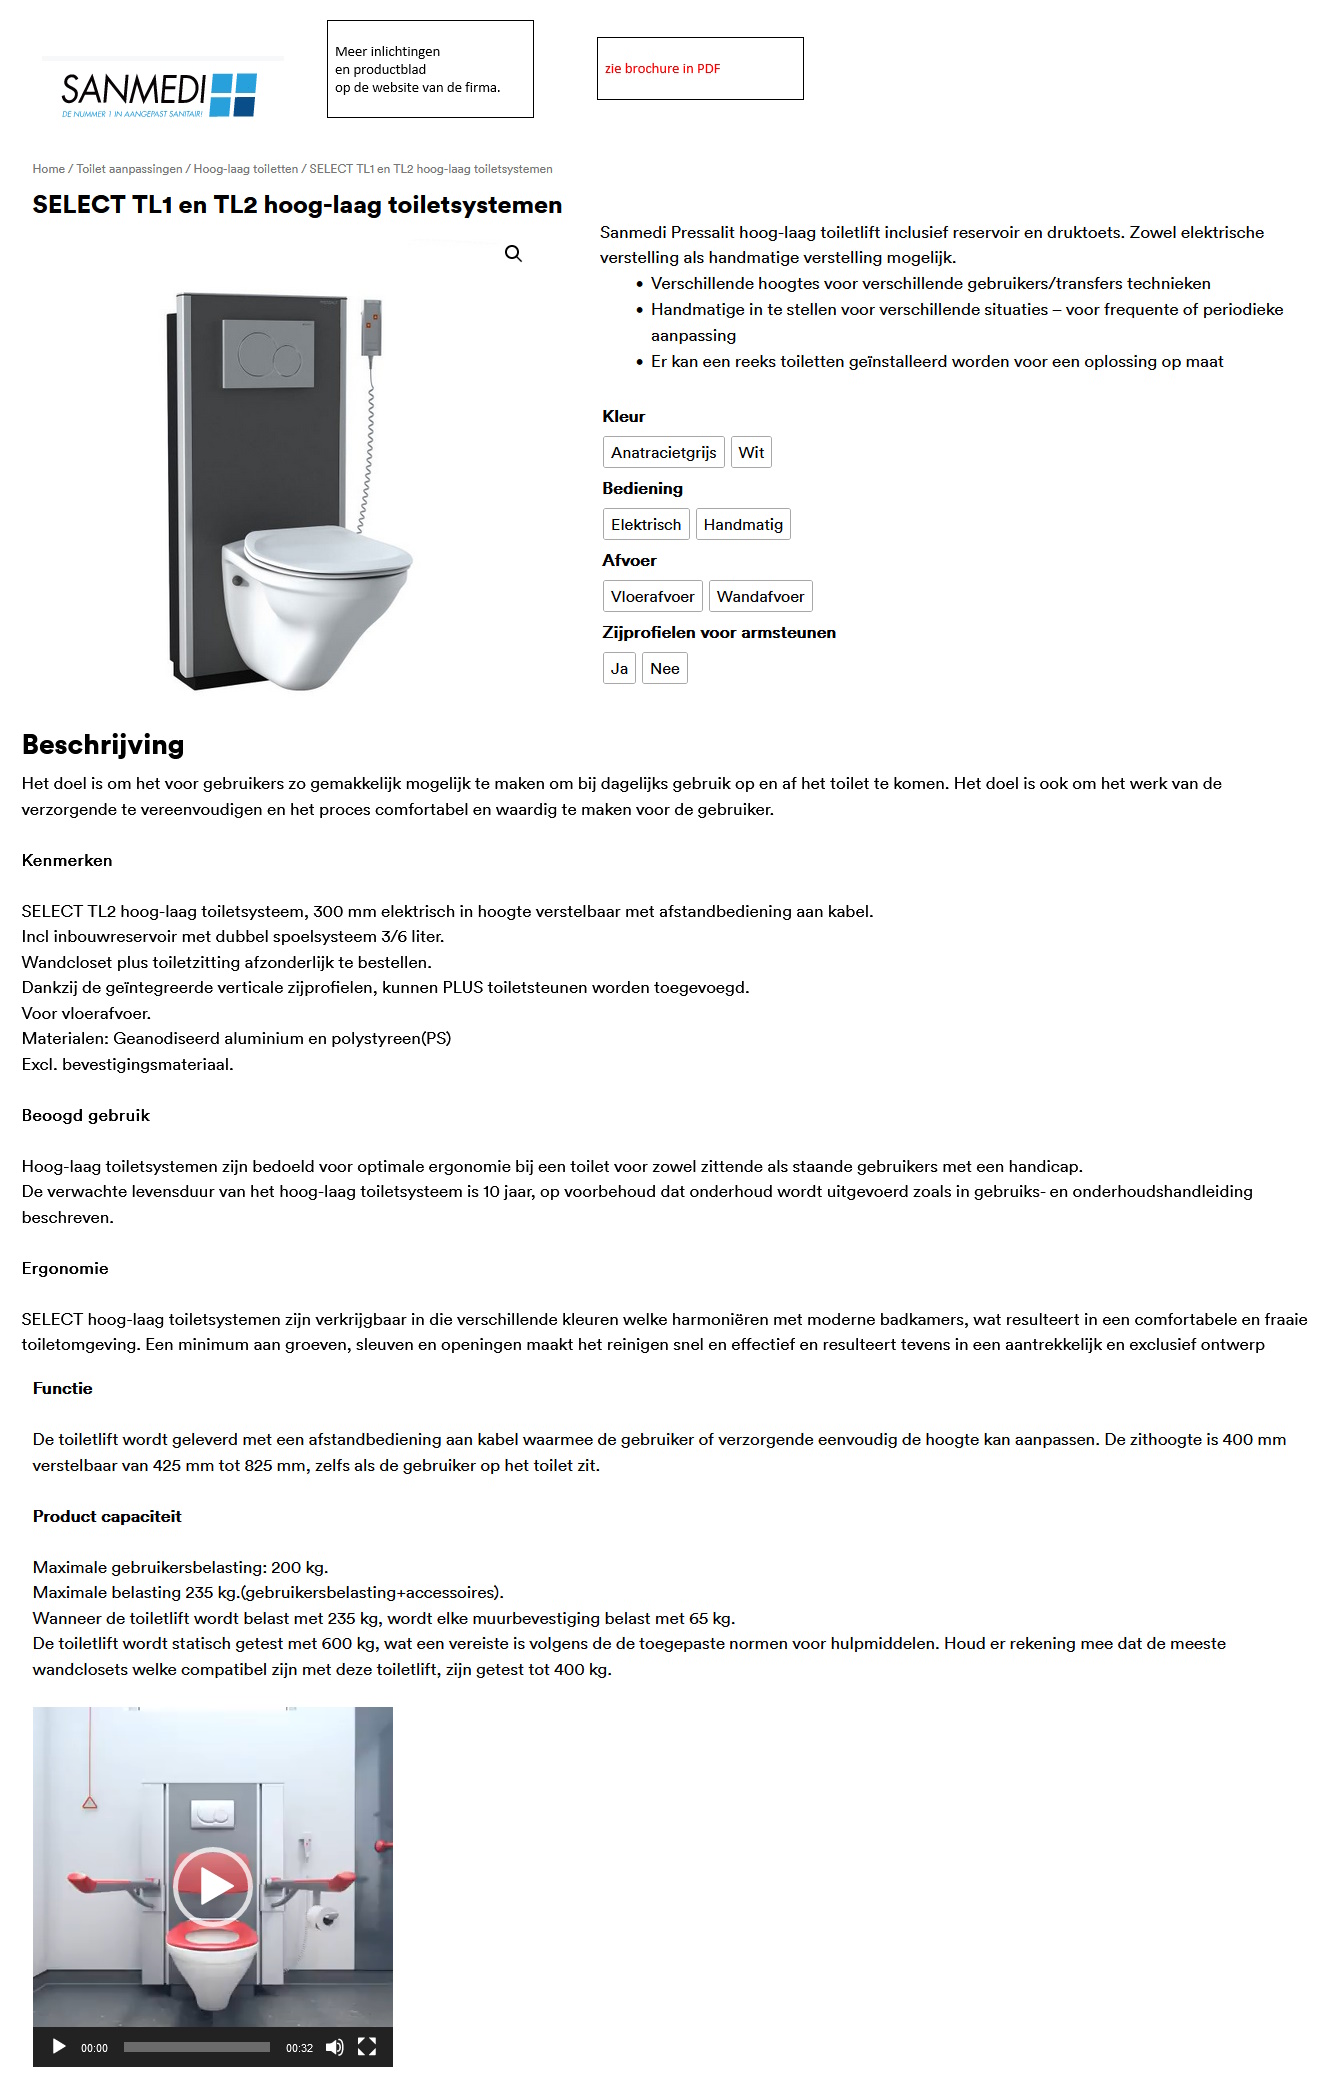 toegevoegd document 3 van Pressalit Select TL hoog-laag toiletsystemen (overzicht)  